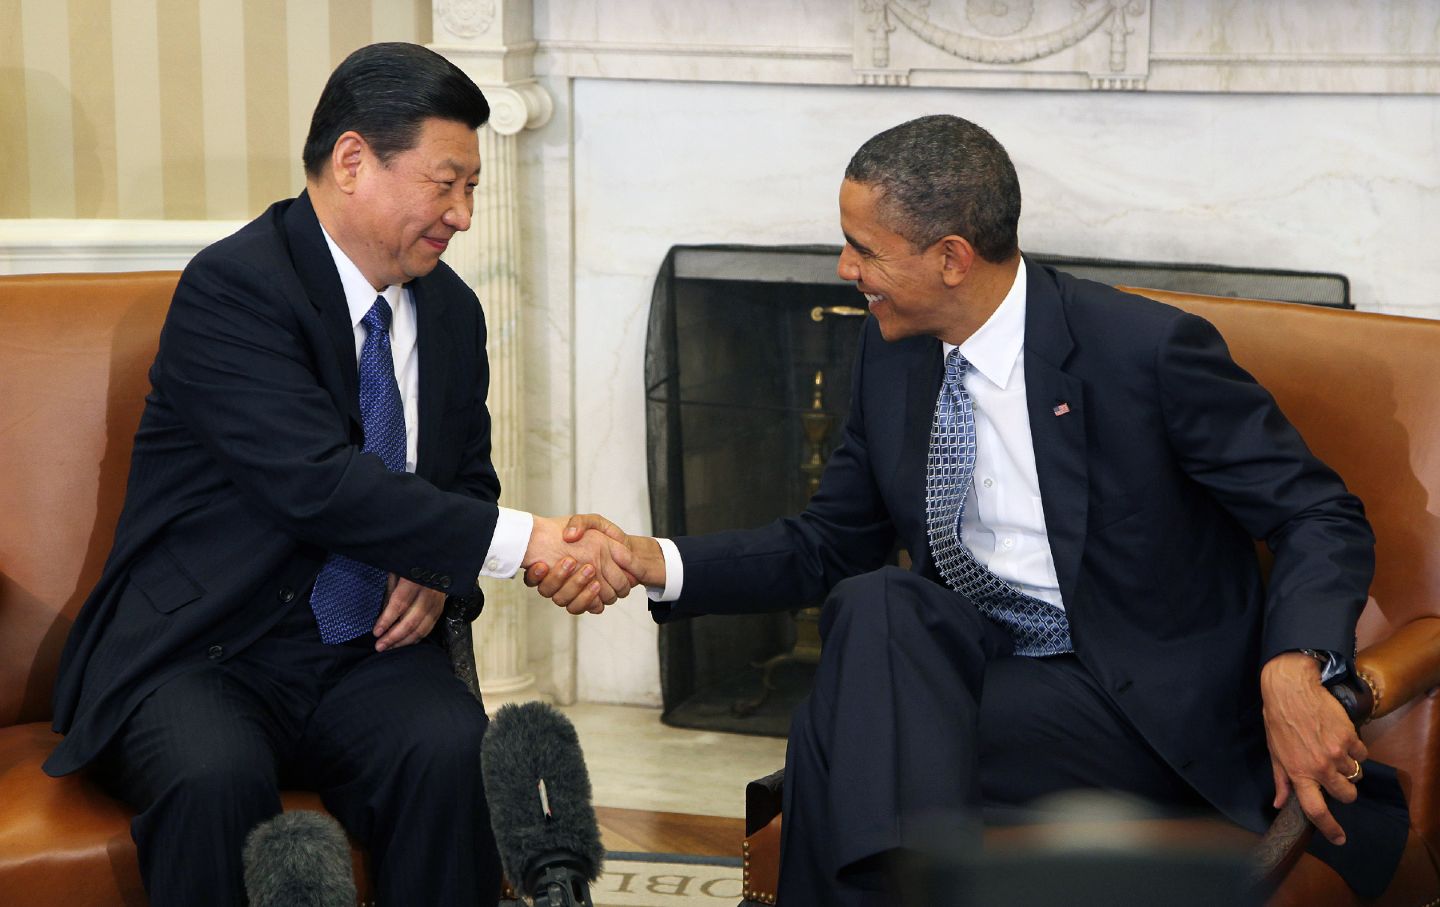 Barack Obama greets Xi Jinping